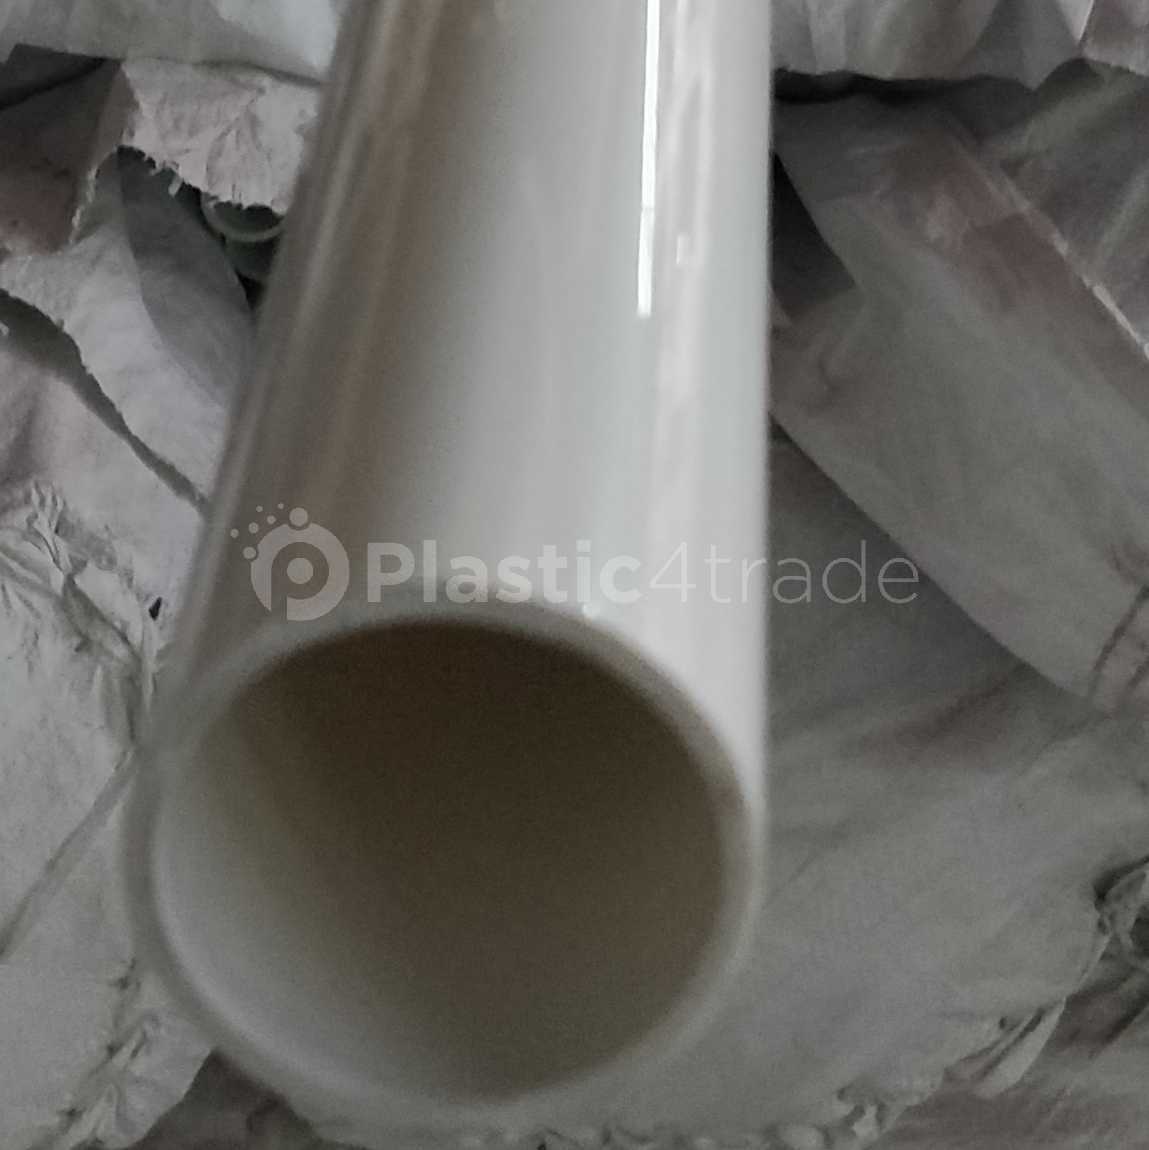 209 PVC Prime/Virgin Pipe west bengal india Plastic4trade